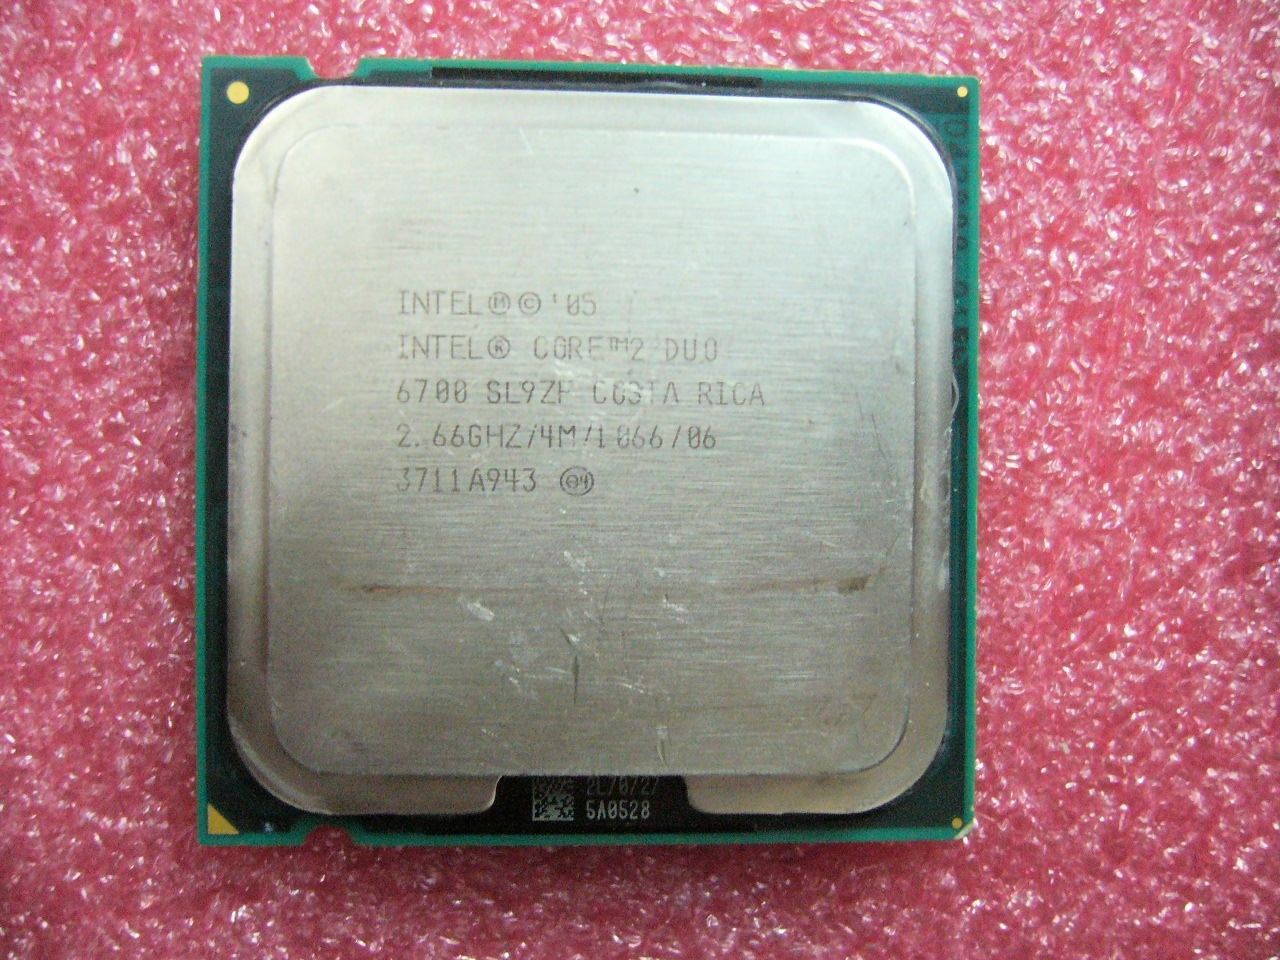 QTY 1x INTEL Core 2 Duo 6700 CPU 2.66GHz 4MB/1066Mhz LGA775 SL9ZF SL9S7